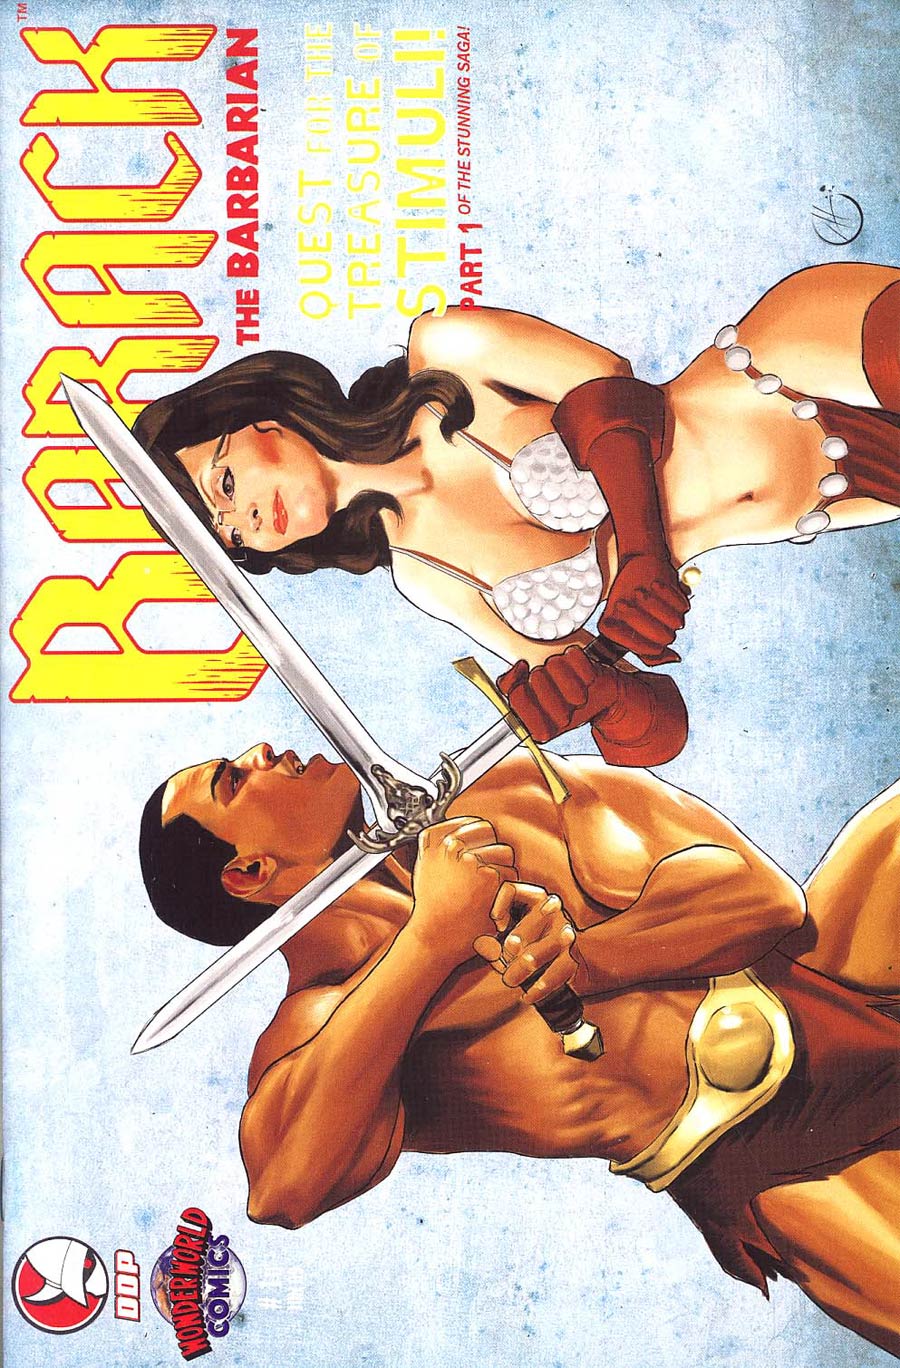 Barack The Barbarian Quest For The Treasure Of Stimuli #1 Cover D Wonderworld Comics Variant Cover